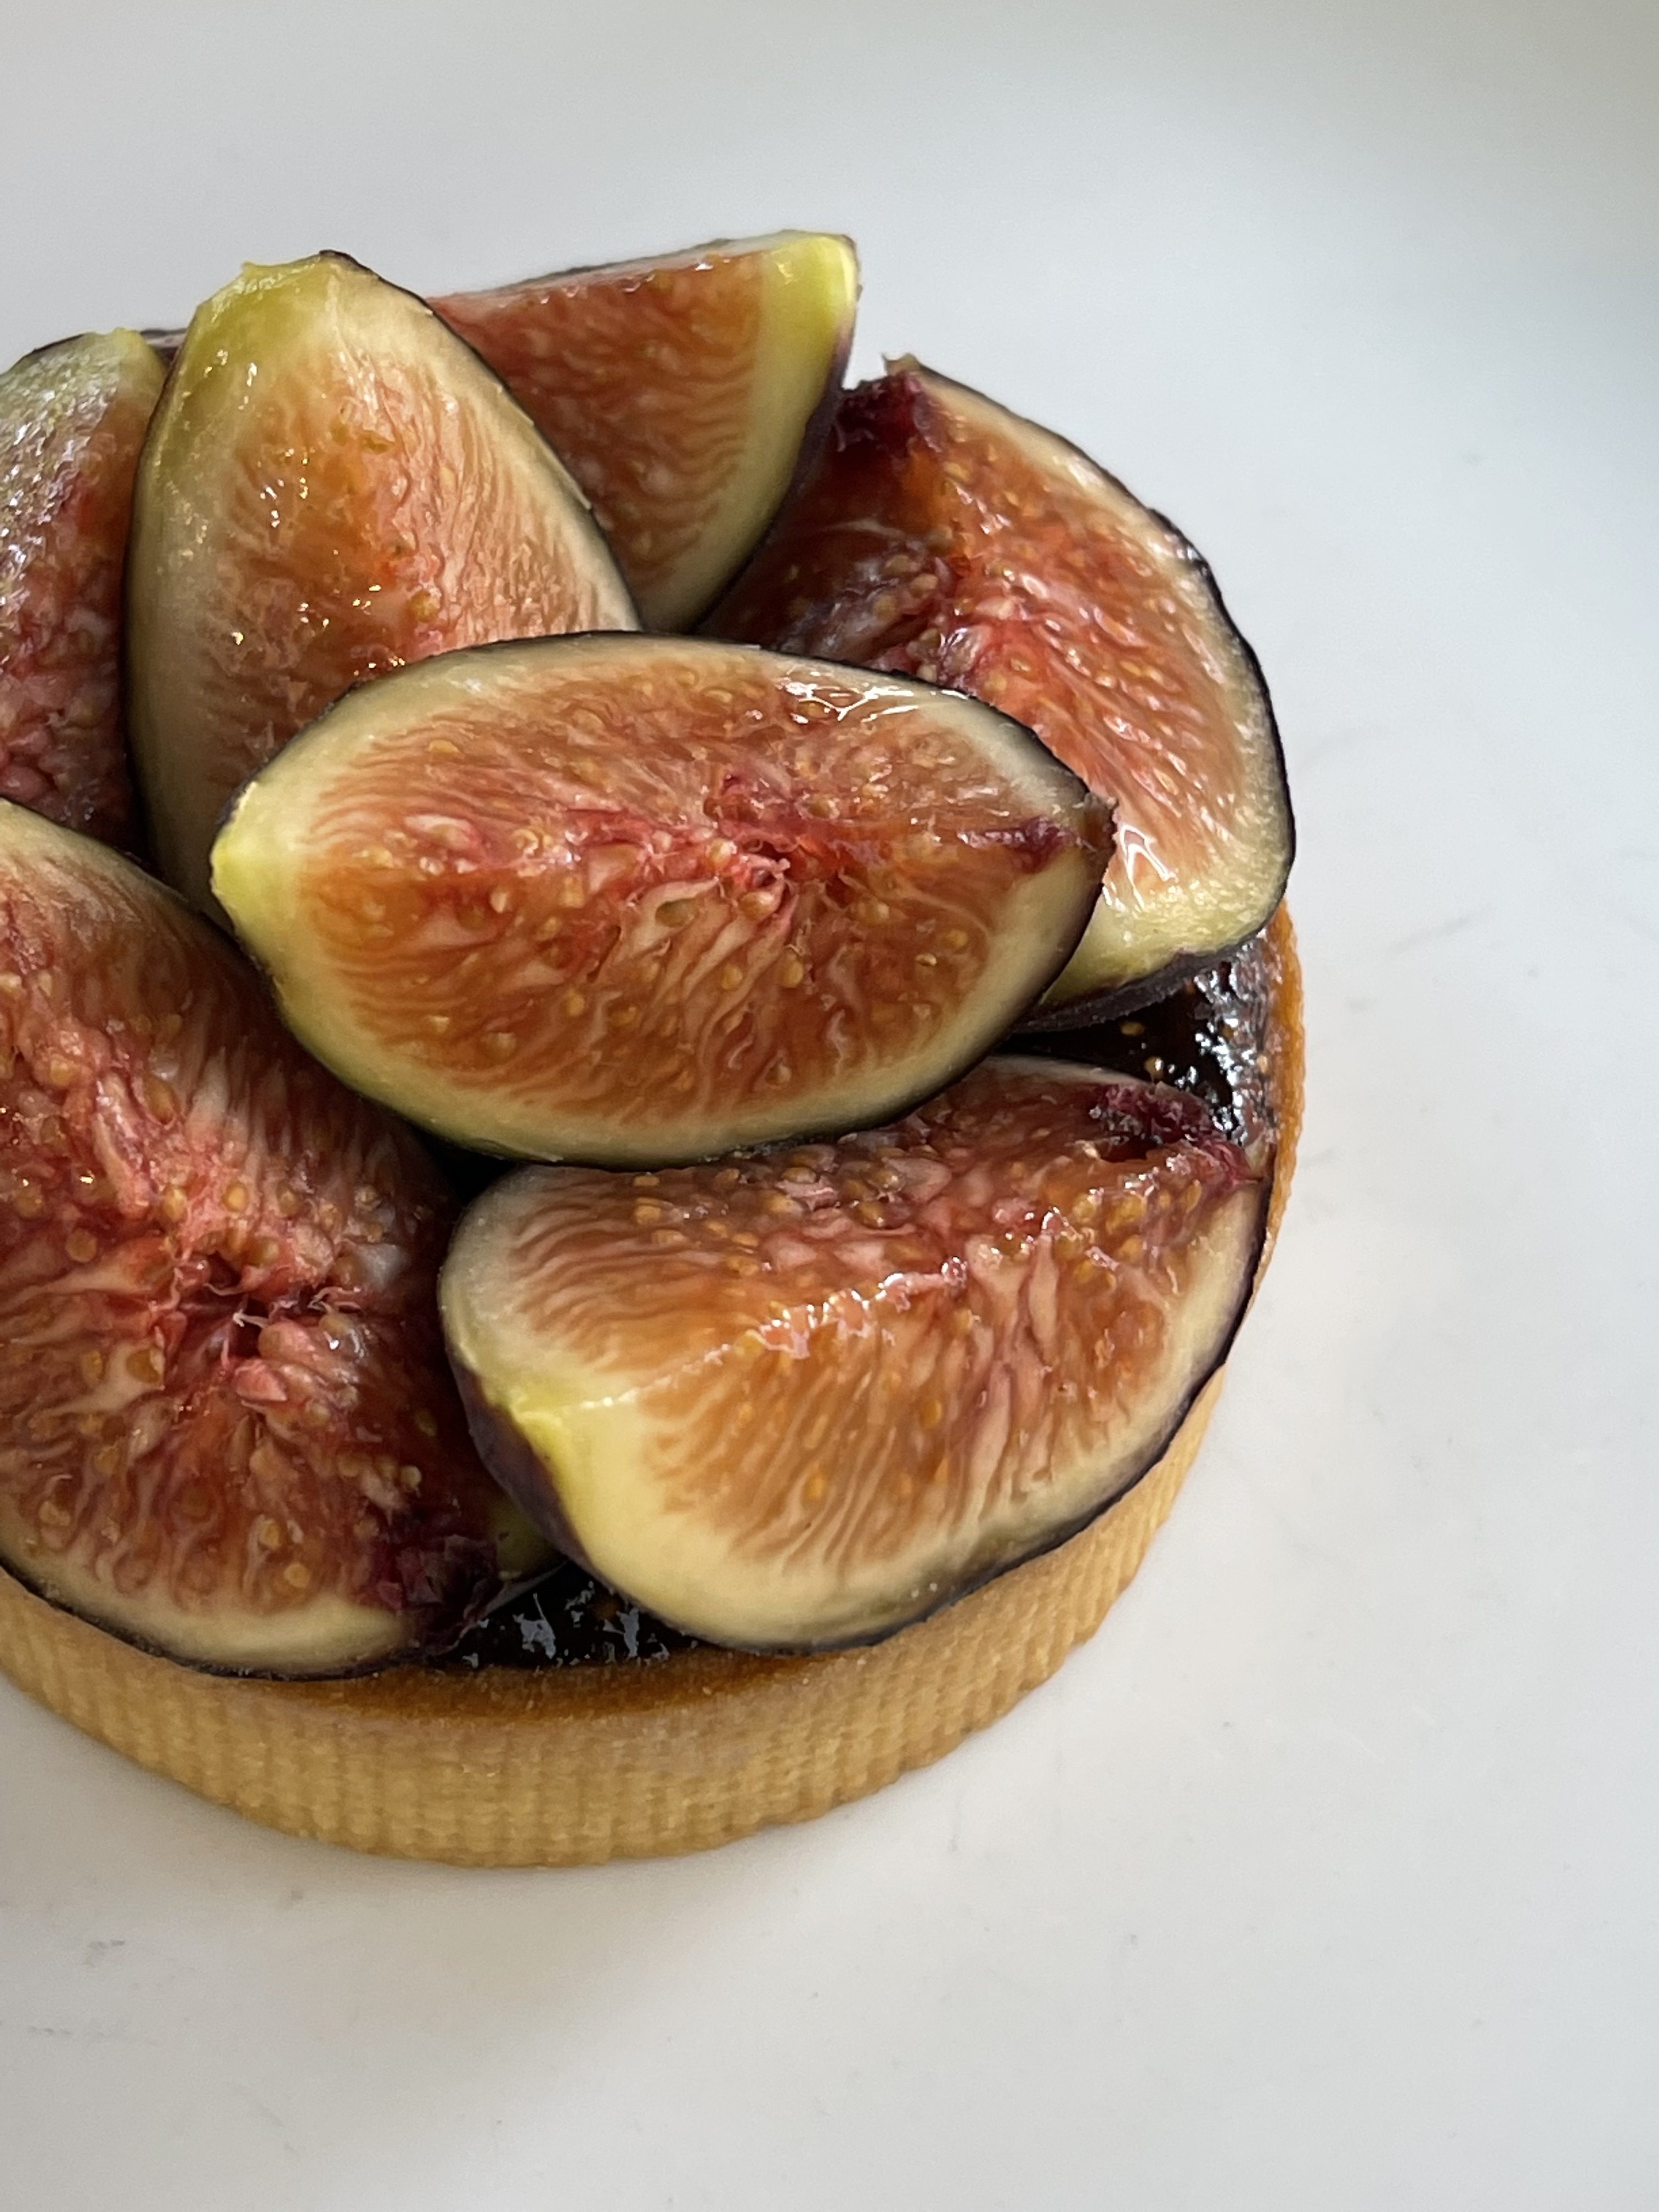 the fig tart